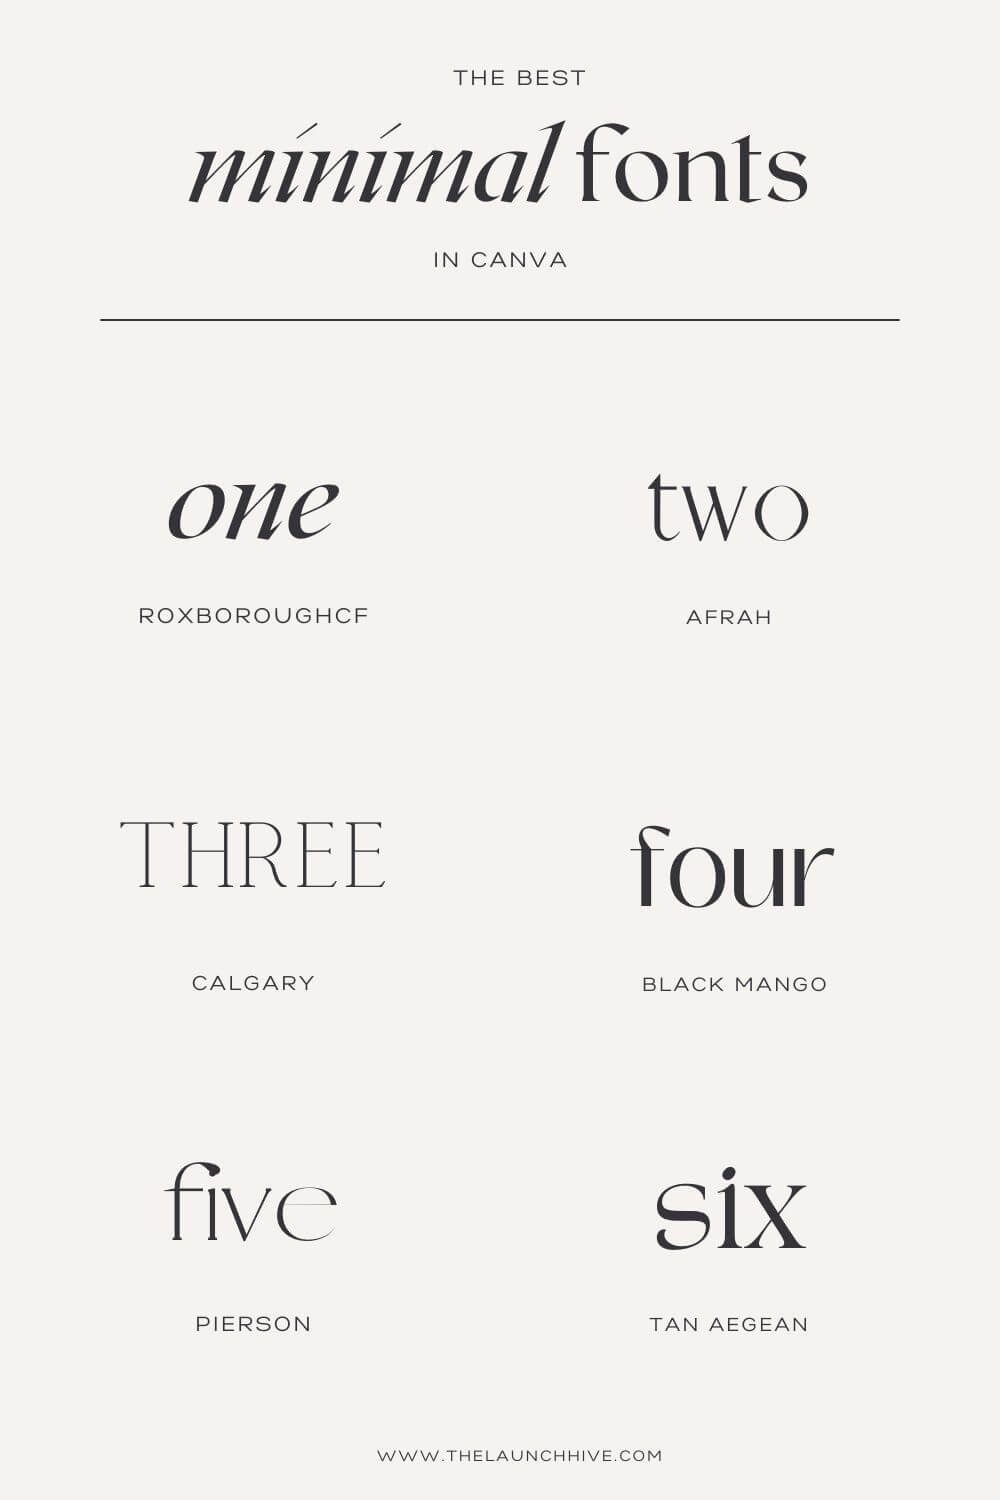 best free minimalist fonts for logos